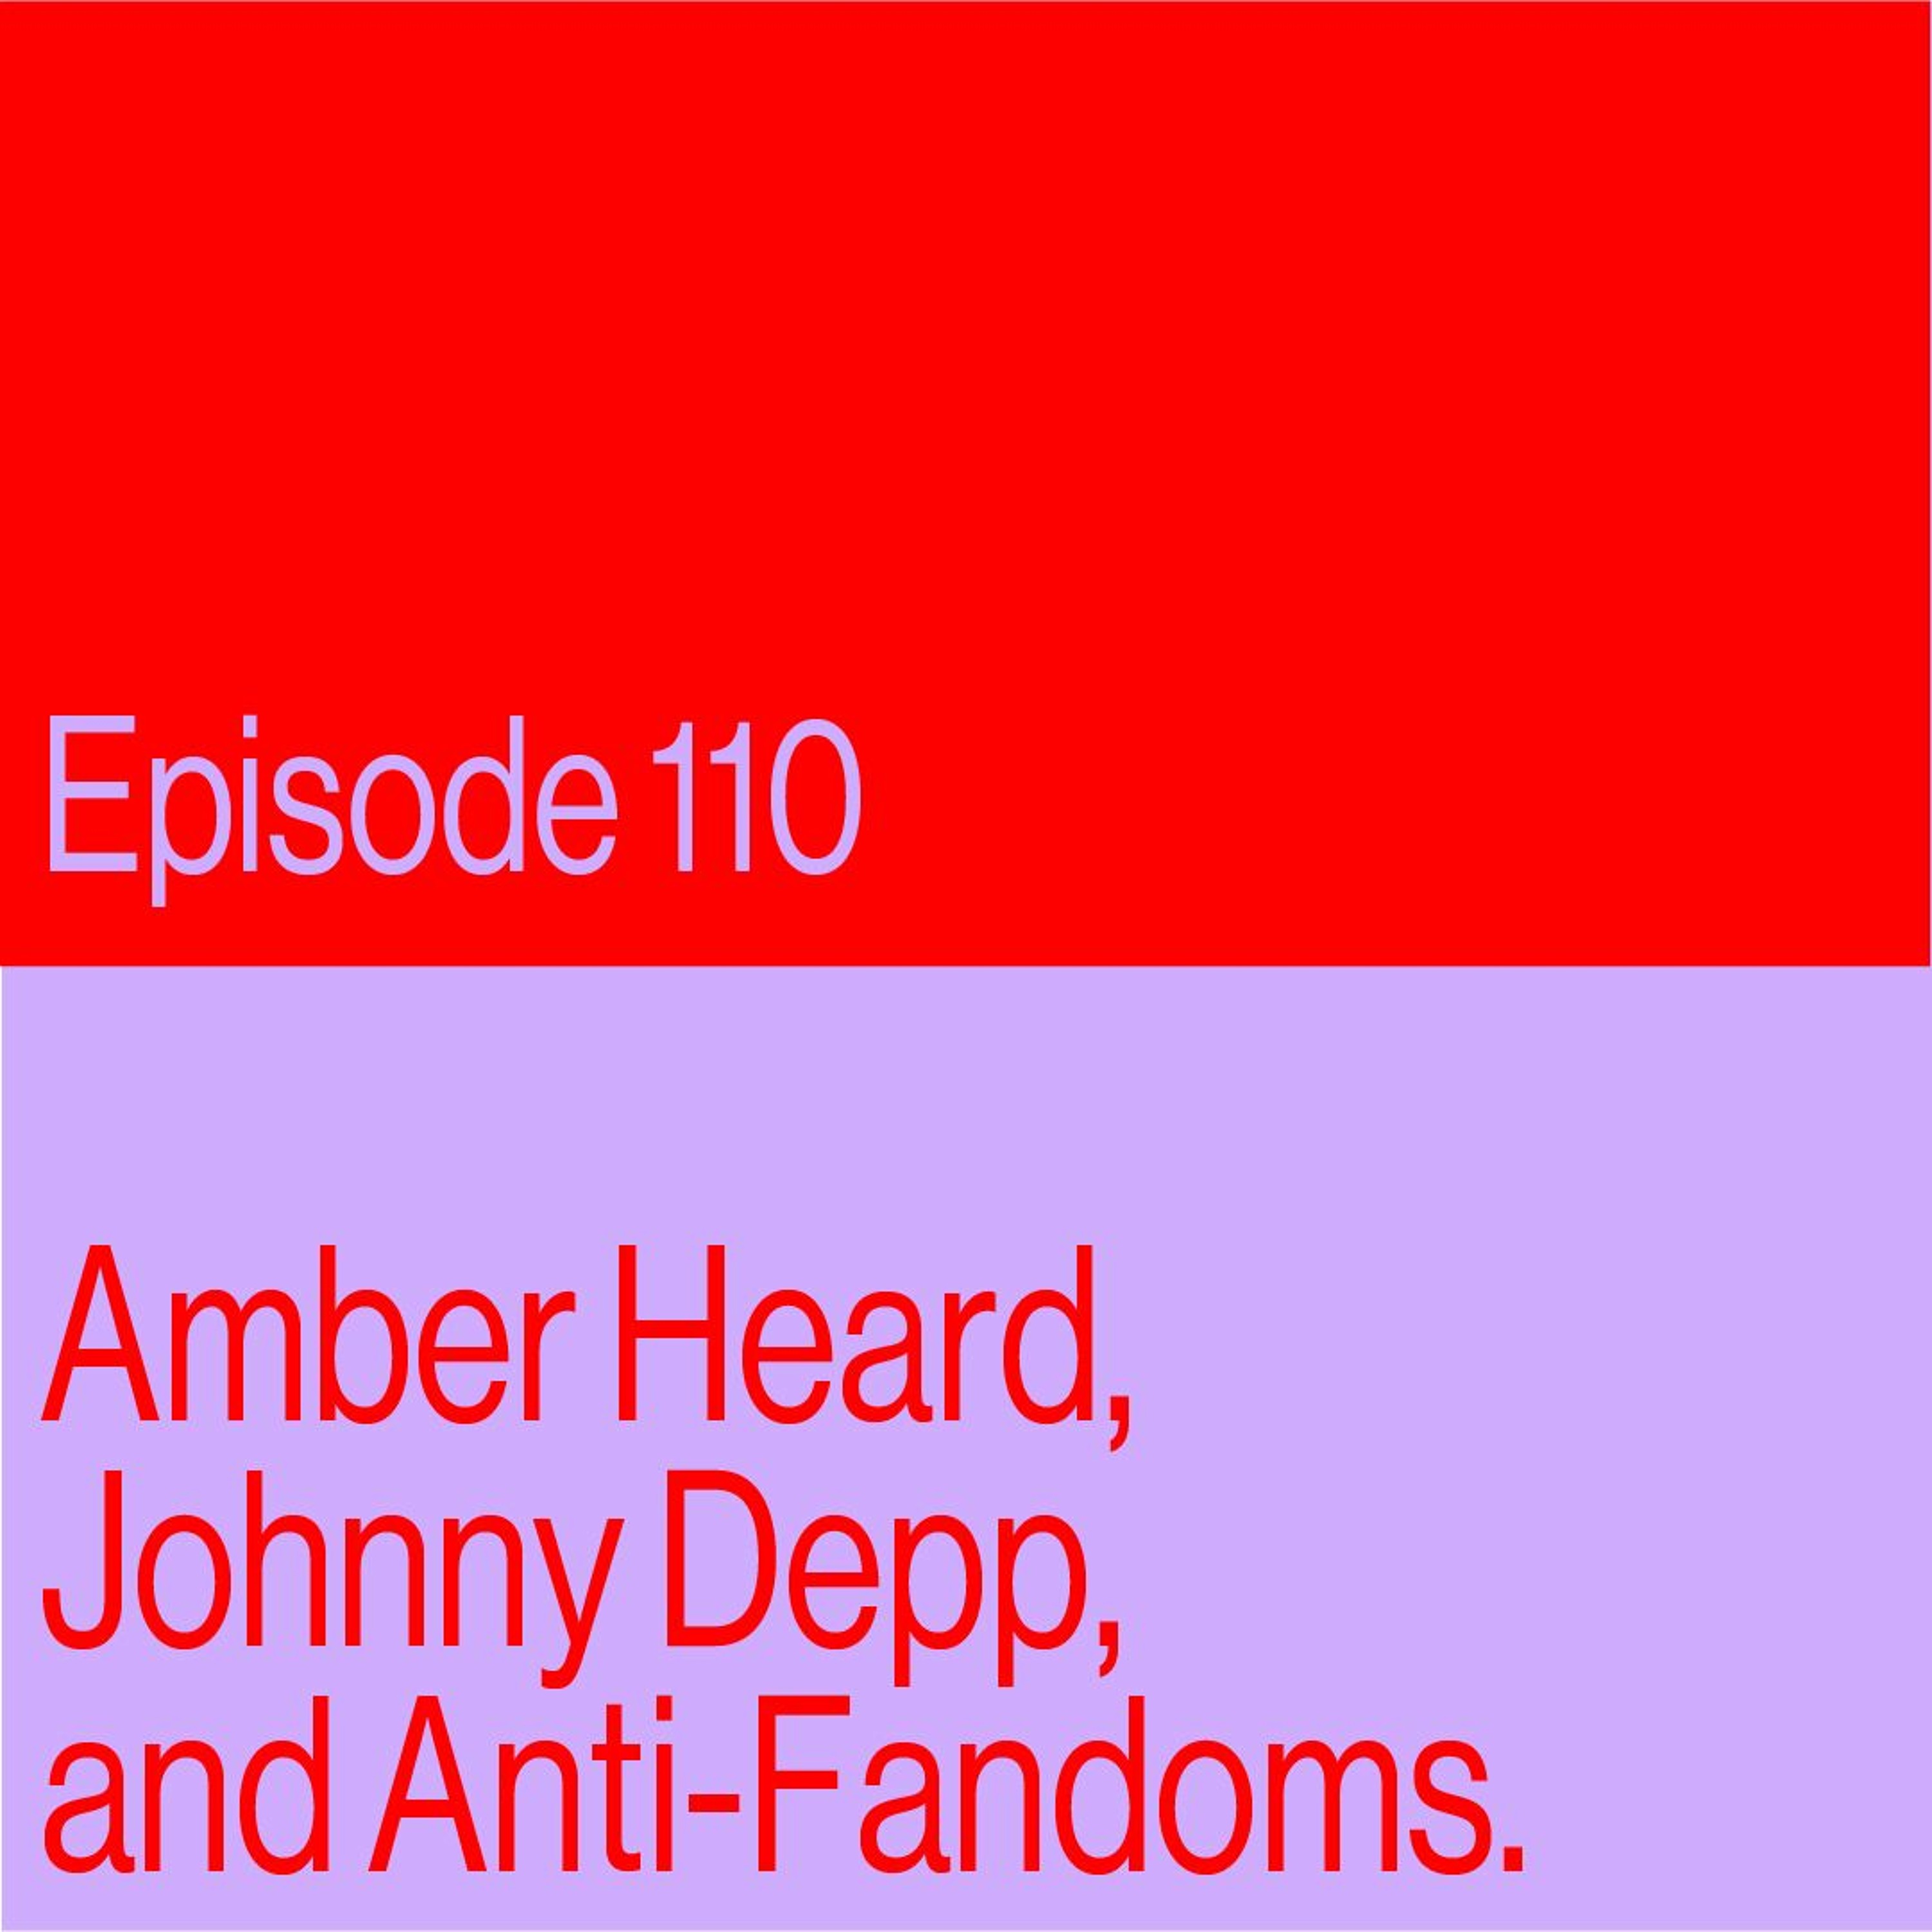 Episode 110: Amber Heard, Johnny Depp and Anti-Fandoms